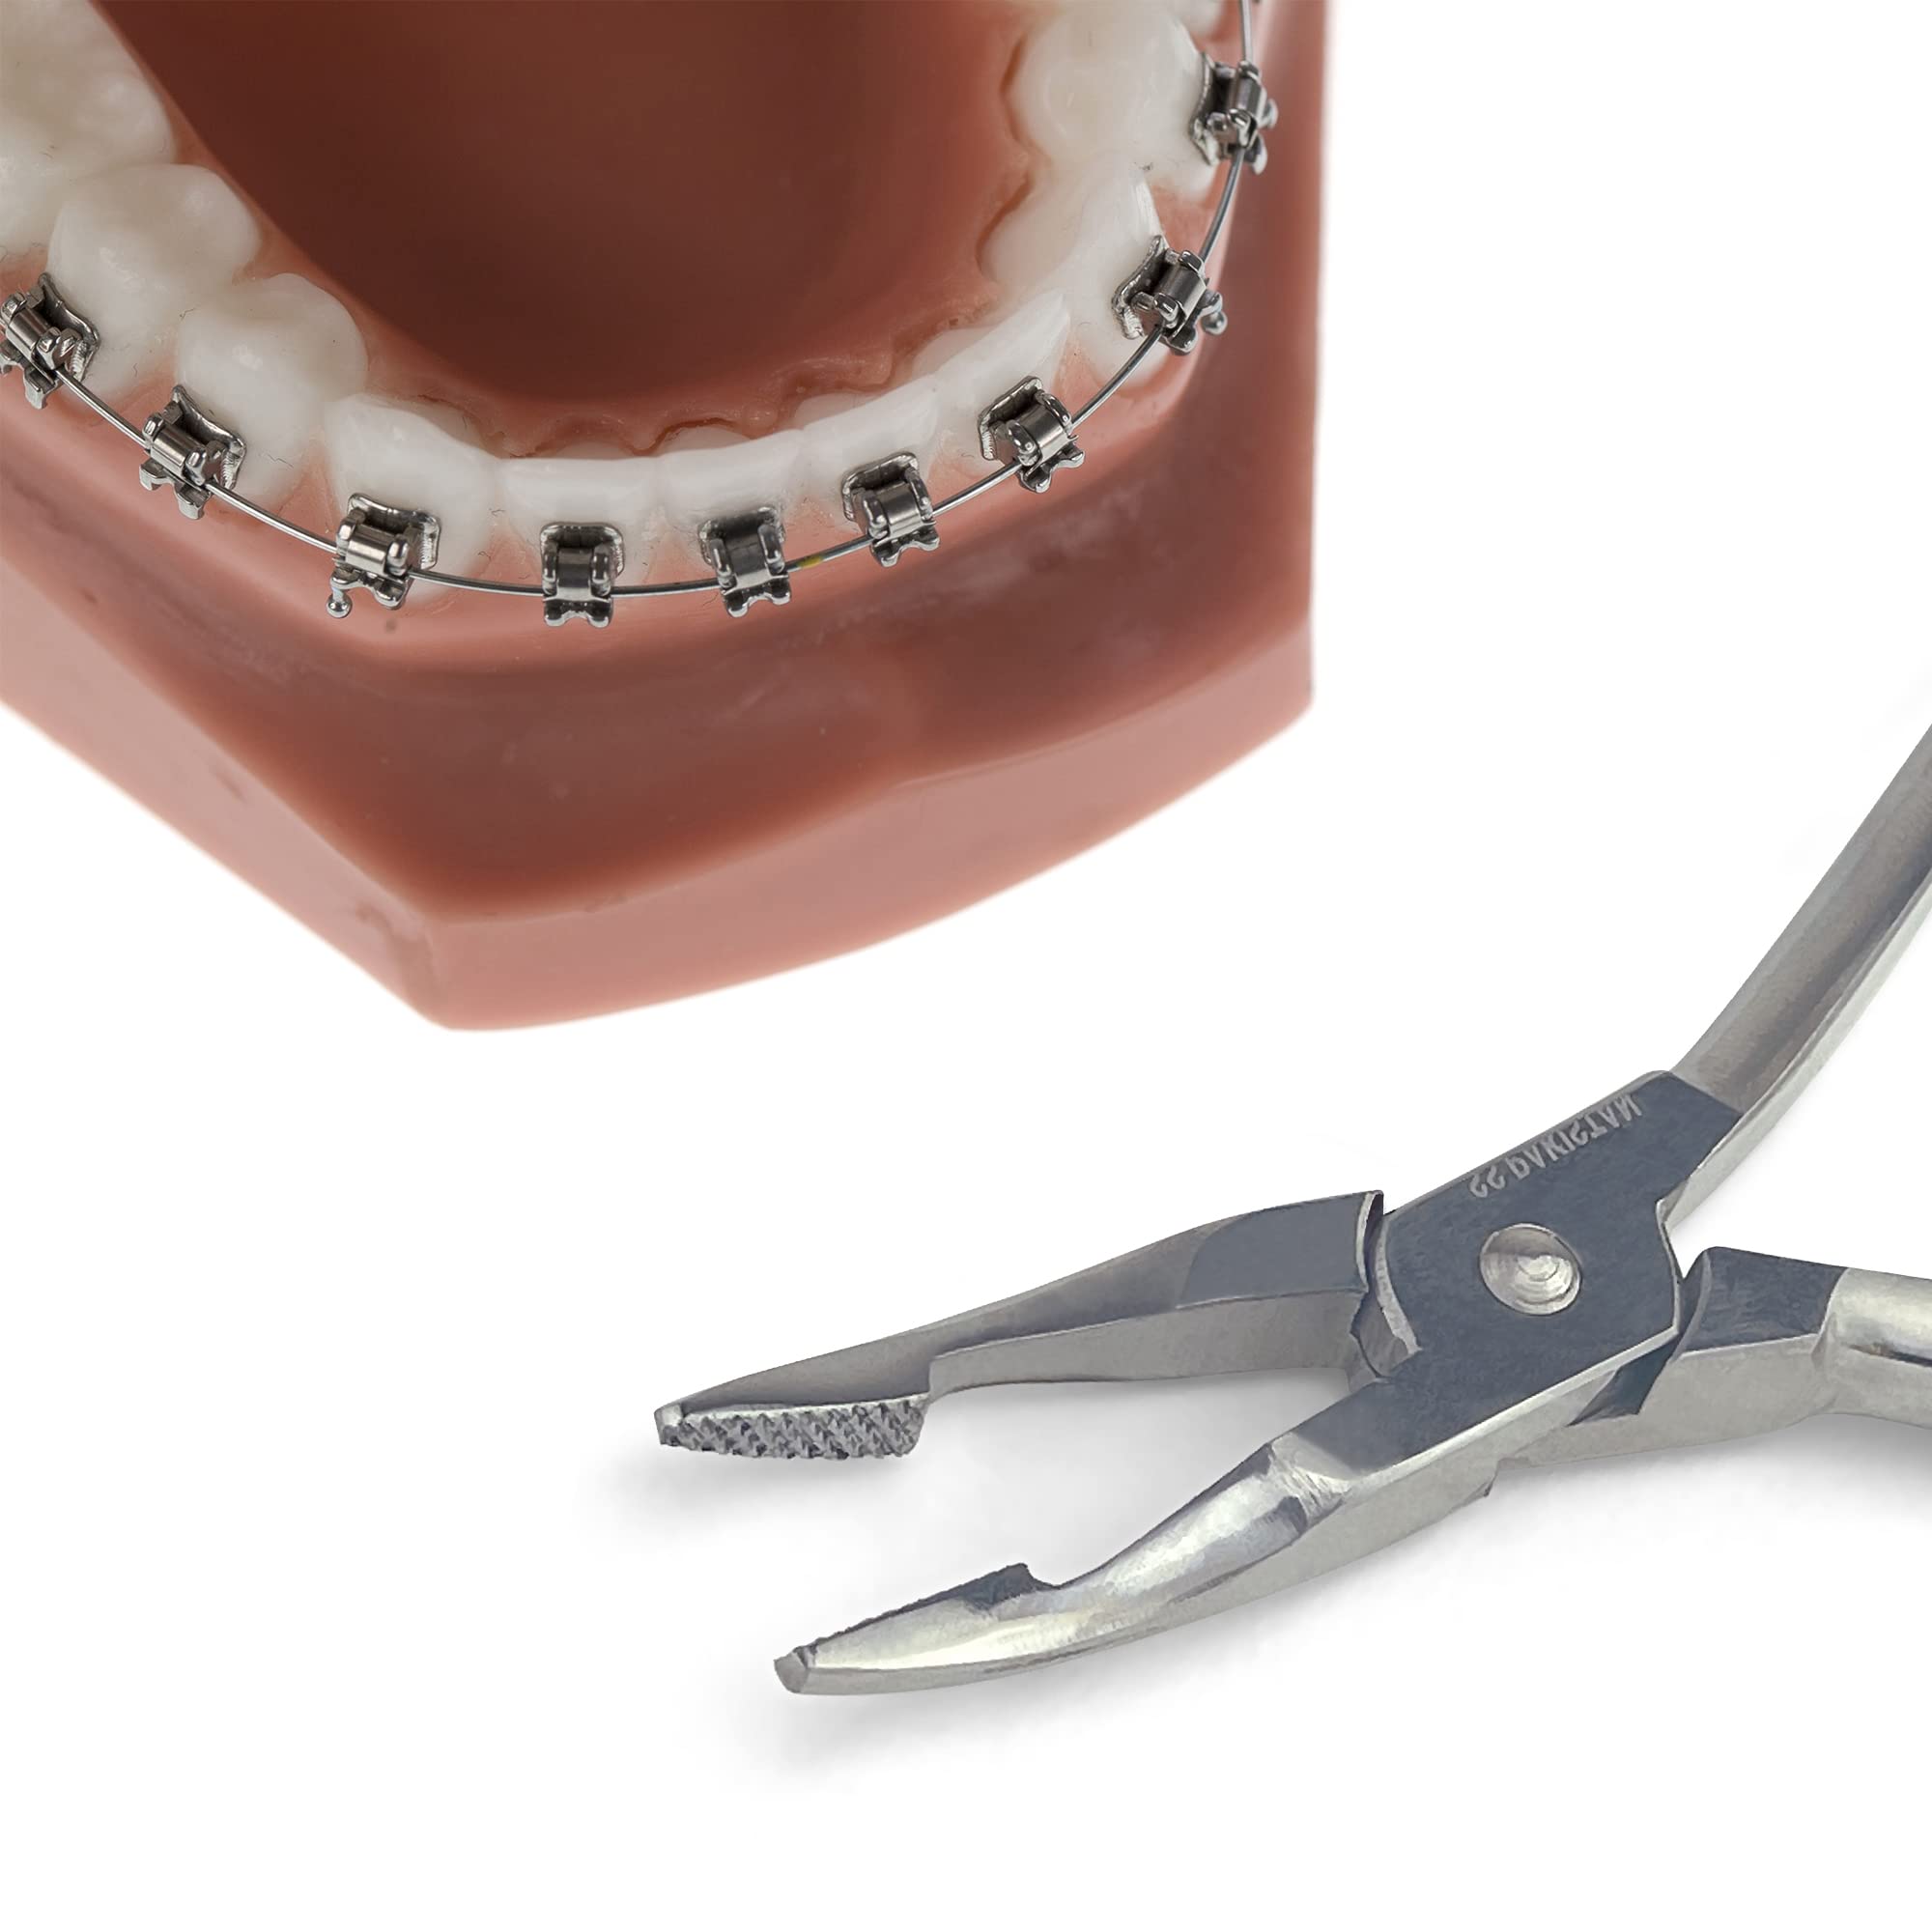 DEXA DENTAL Weingart Plier Dental Wire Bending Orthodontics Braces Placement Stainless Steel Instruments